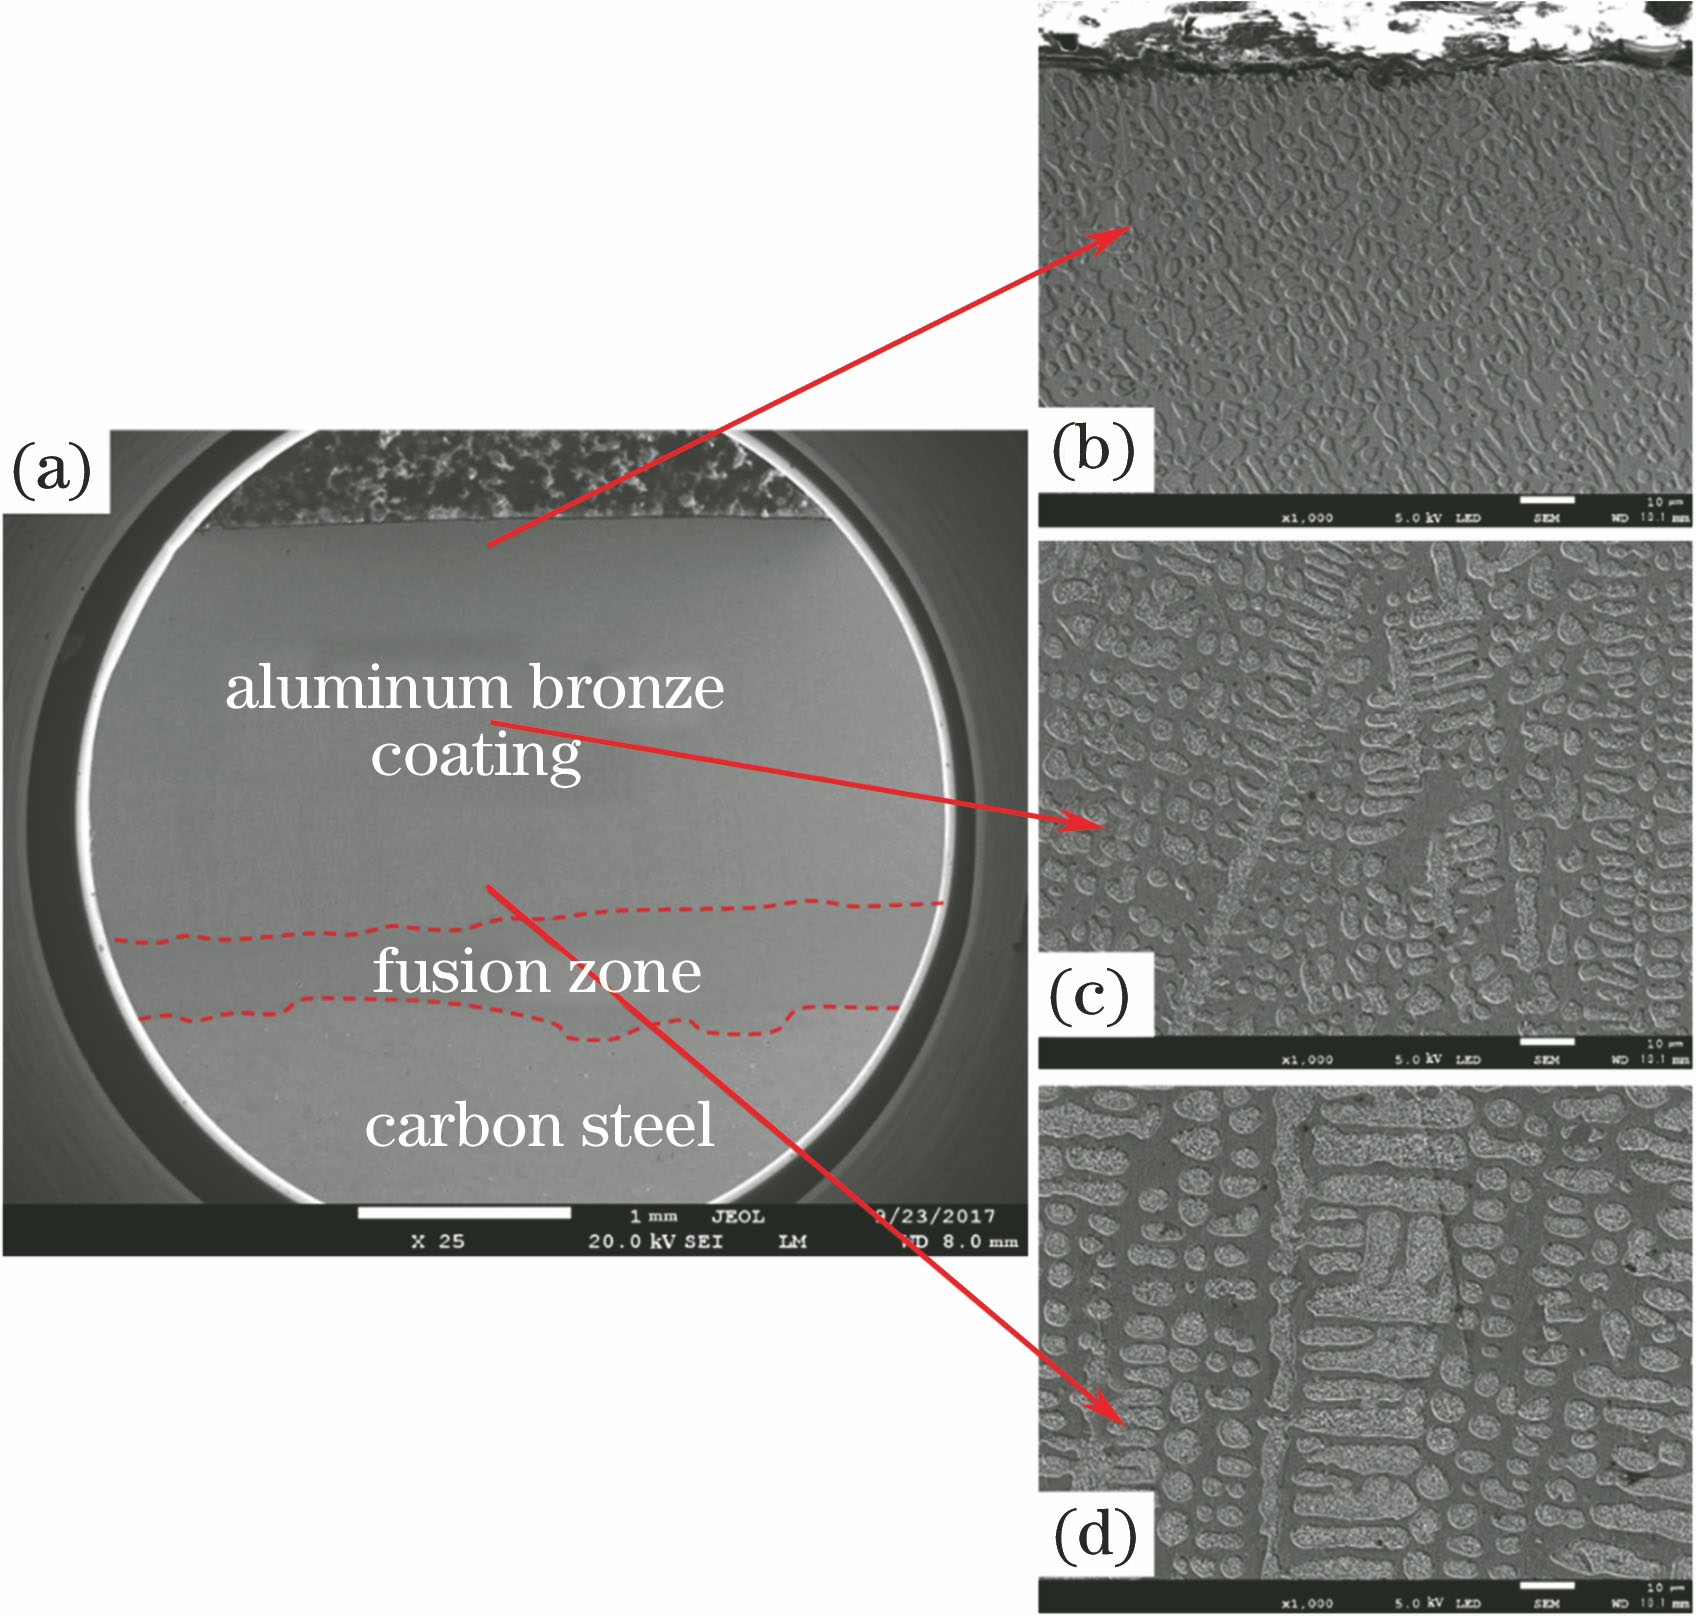 Morphology of aluminum bronze coating. (a) Overall; (b) upper region; (c) middle region; (d) bottom region